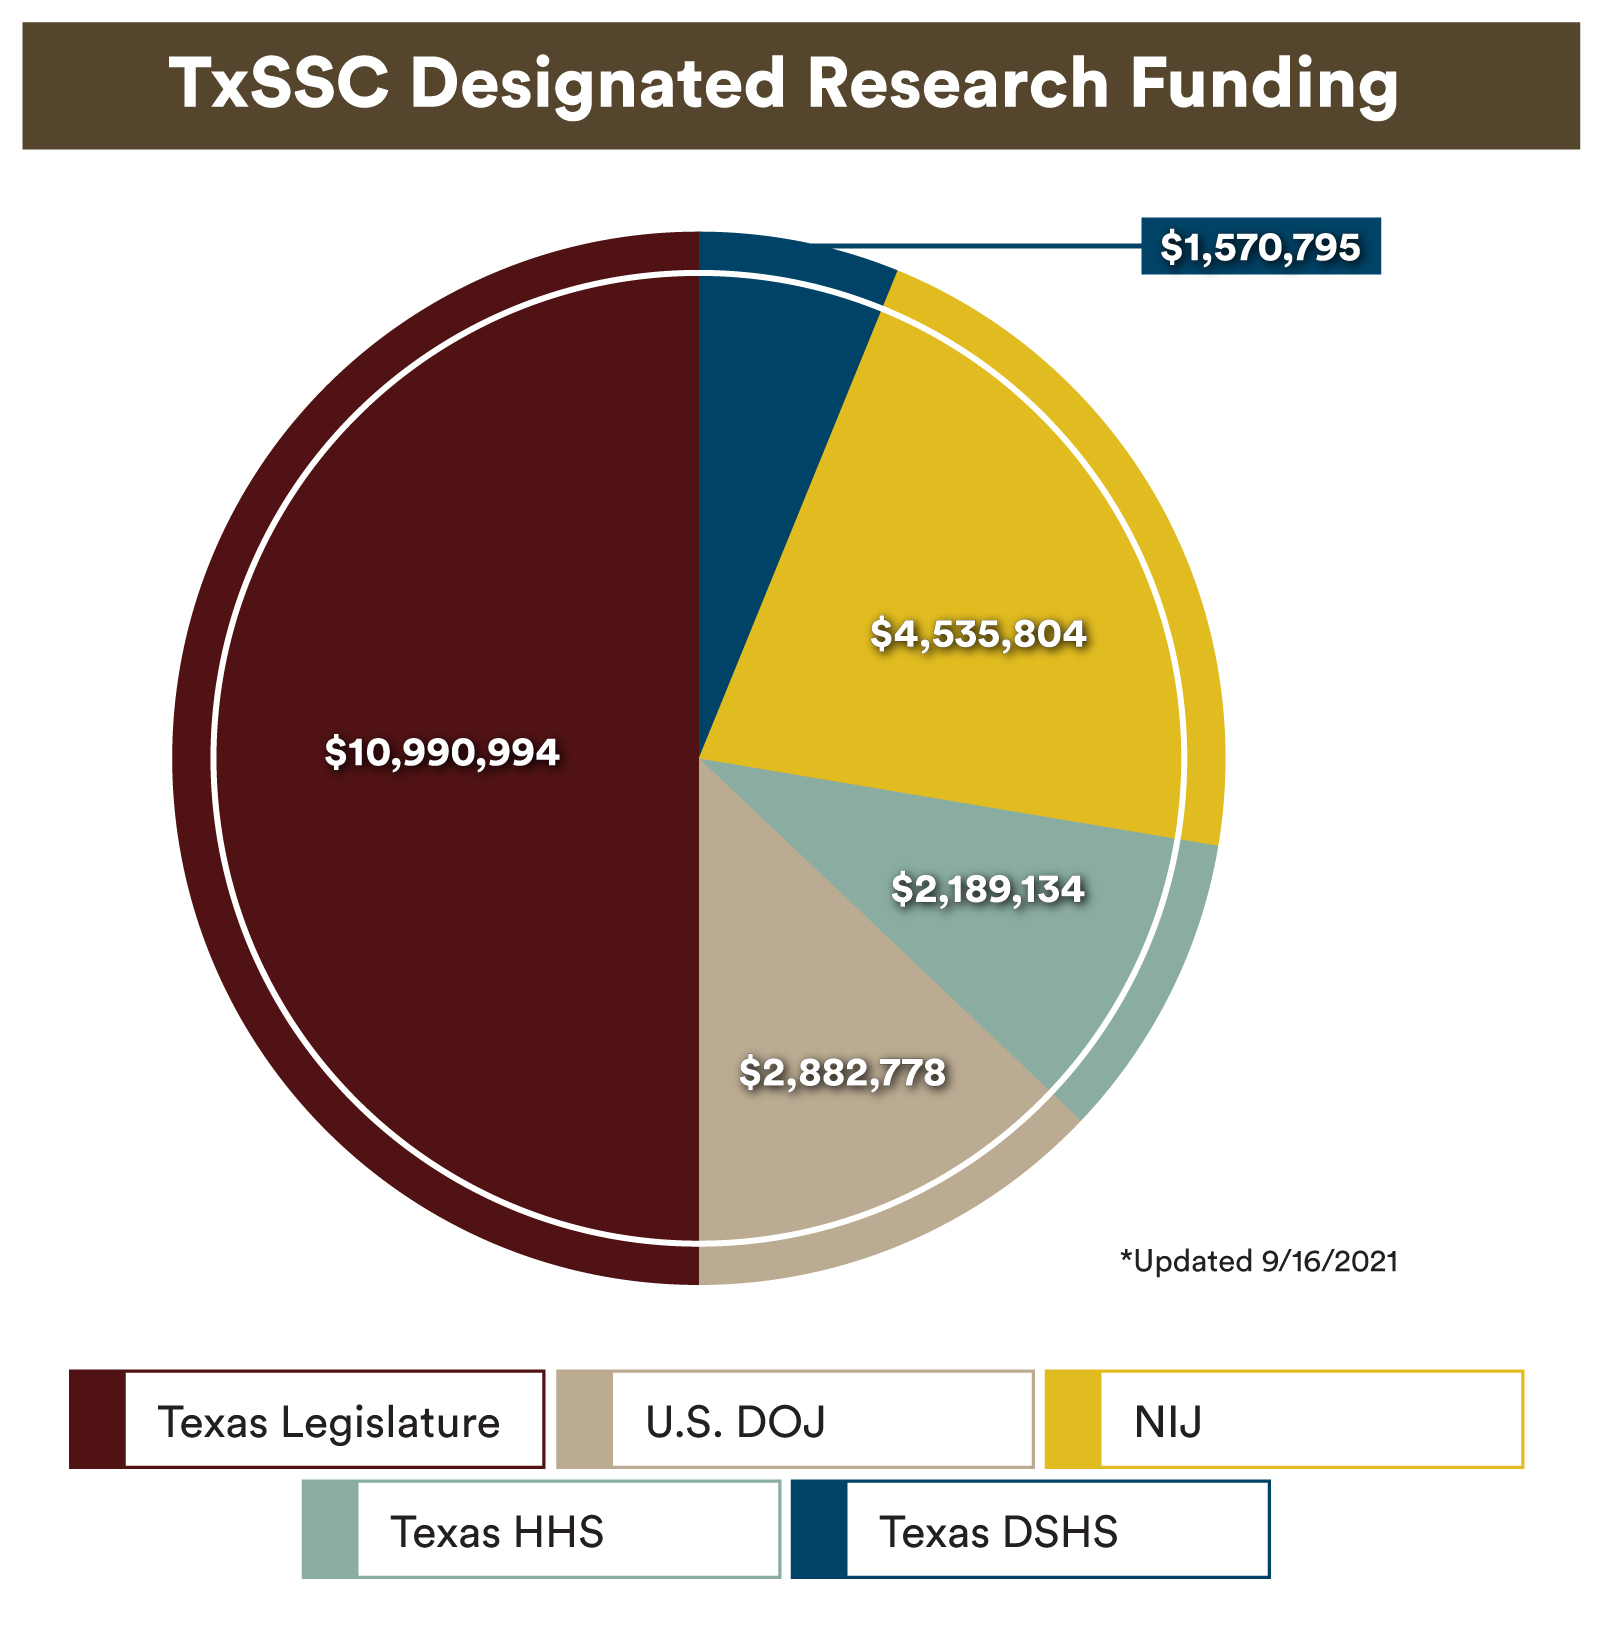 txssc designated funding pie chart